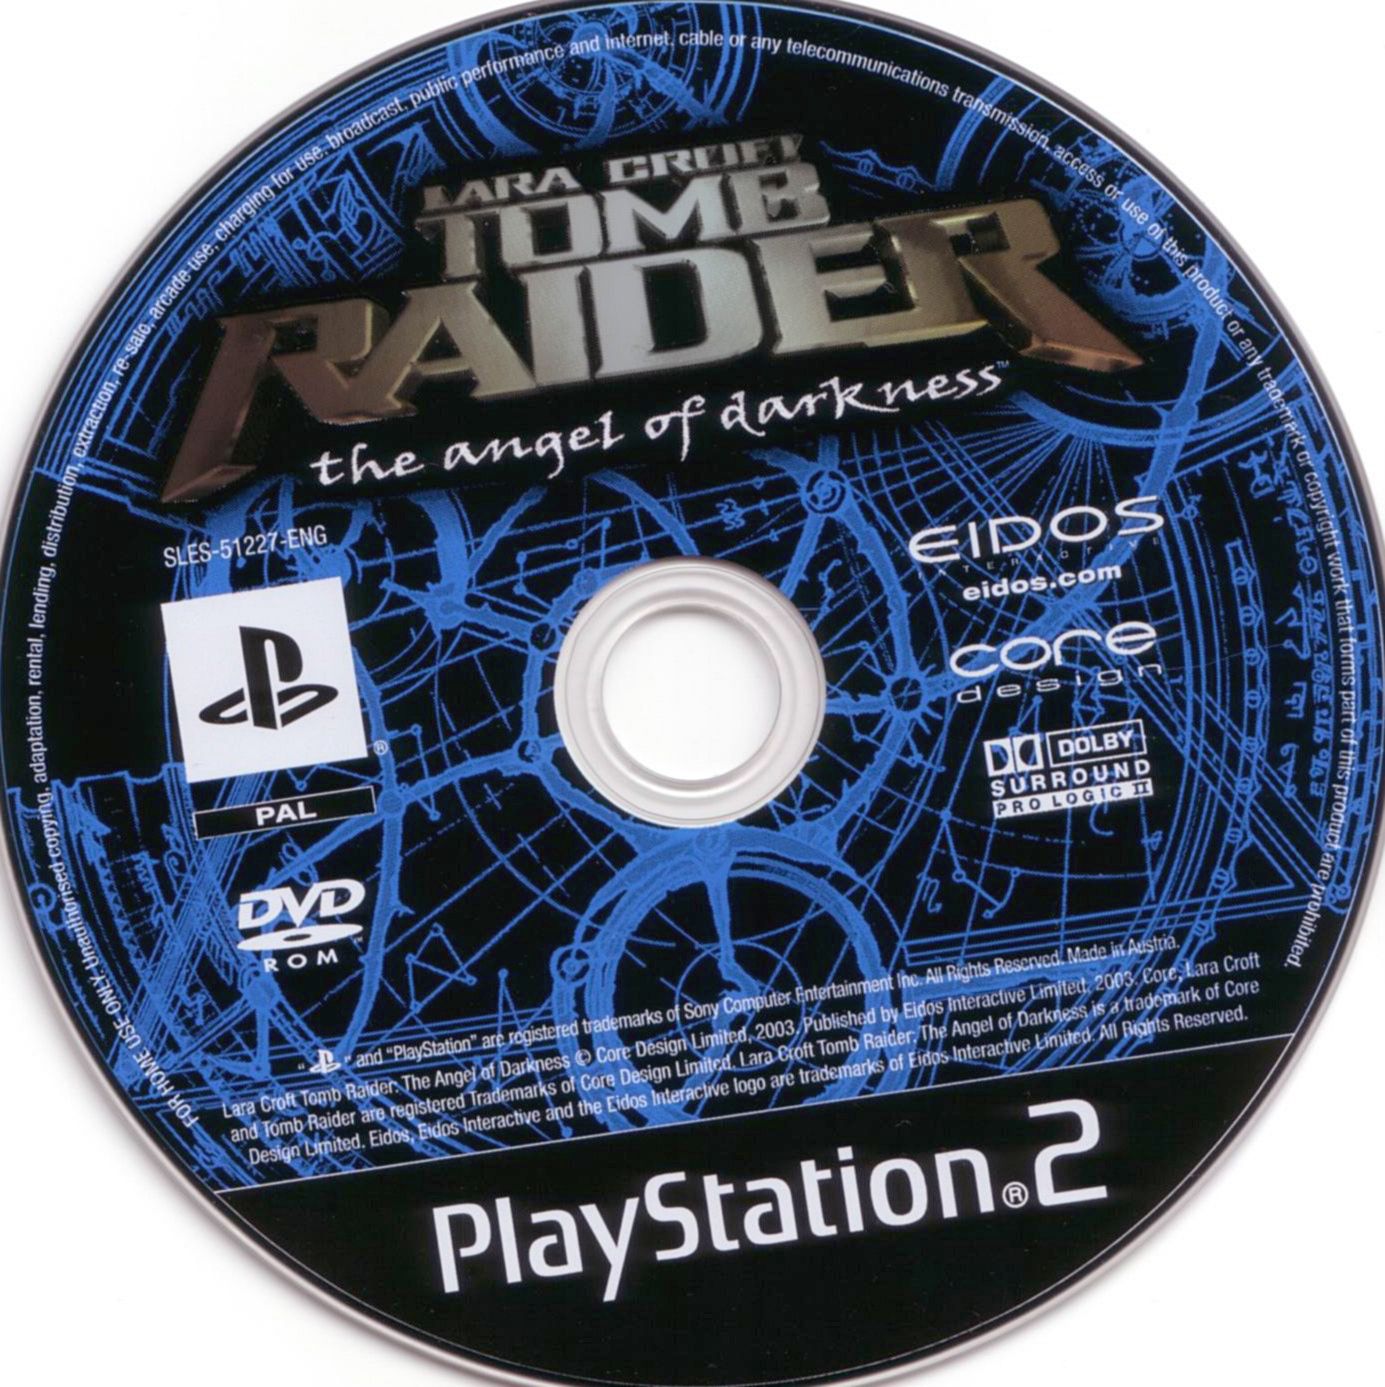 Lara Croft - Tomb Raider - The Angel of Darkness PSX cover